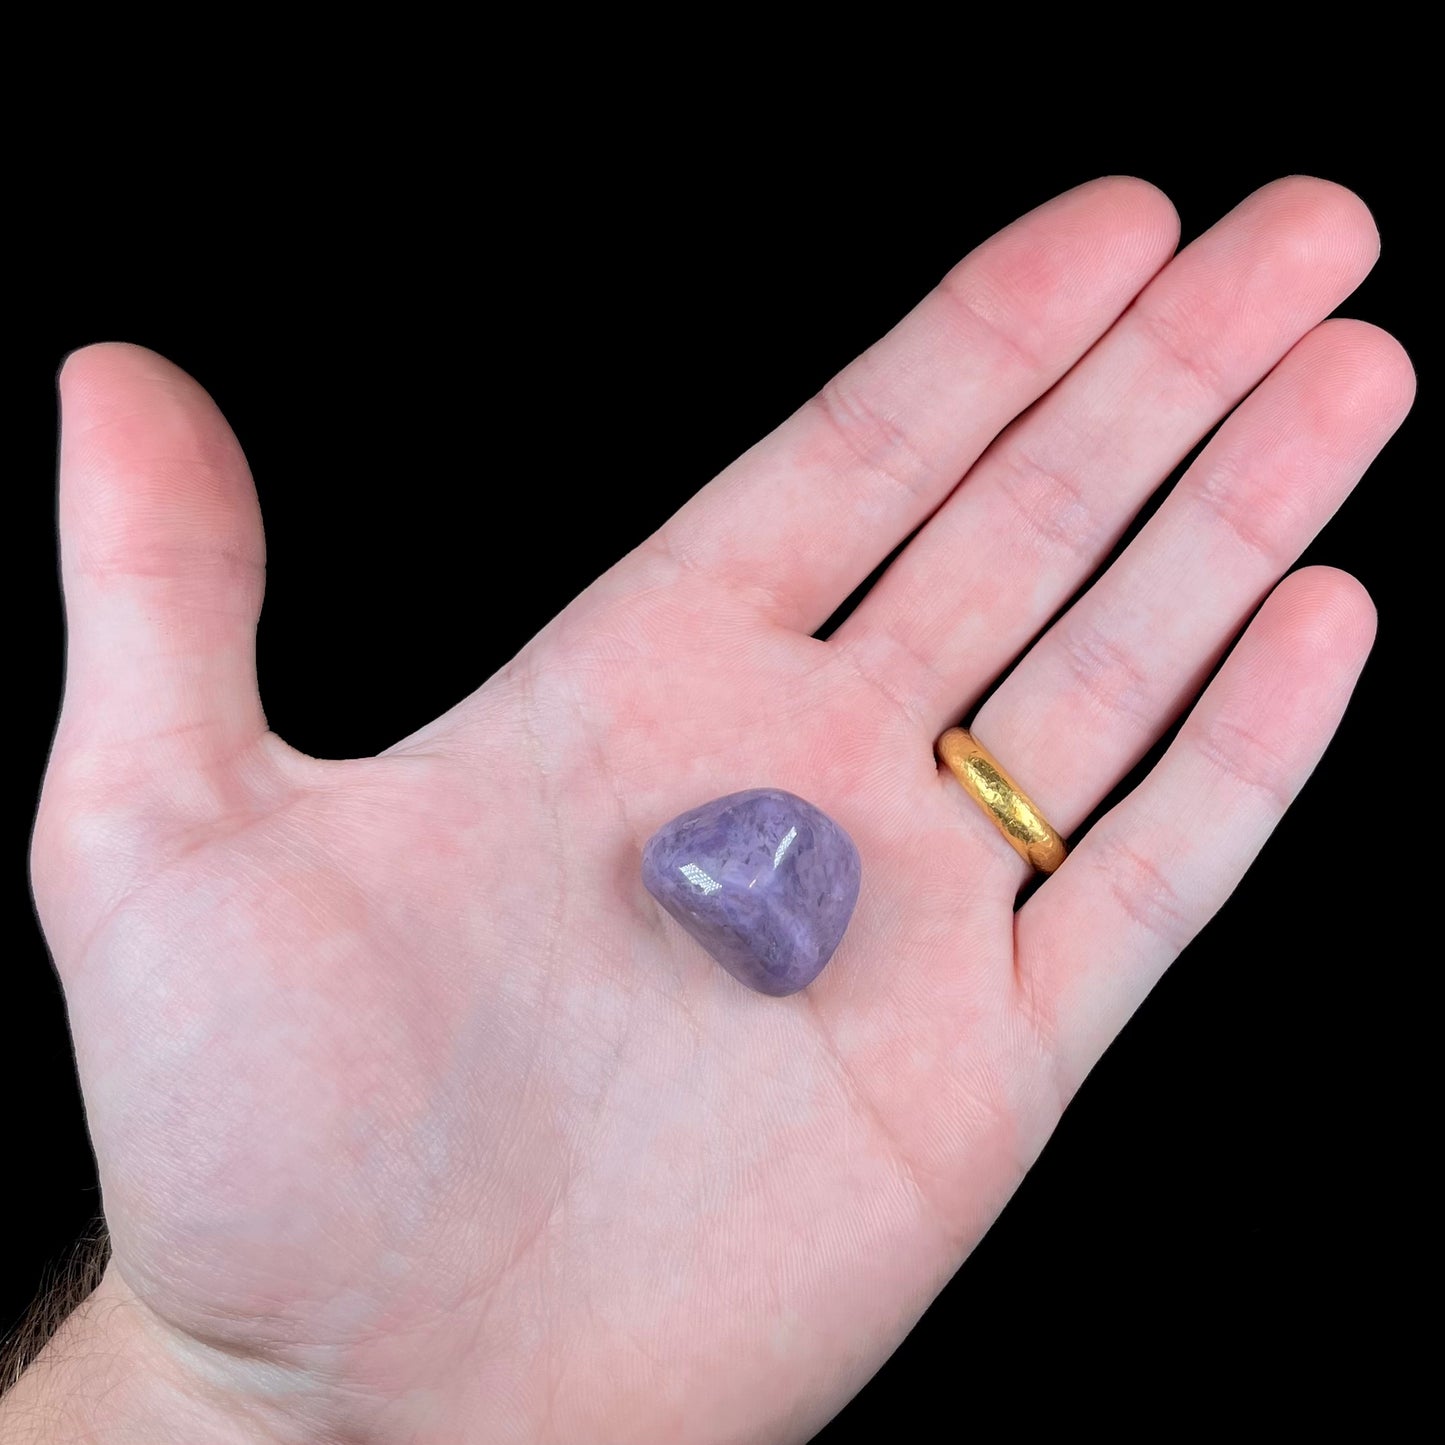 A tumbled Turkish purple jade stone, known as turkiyenite.